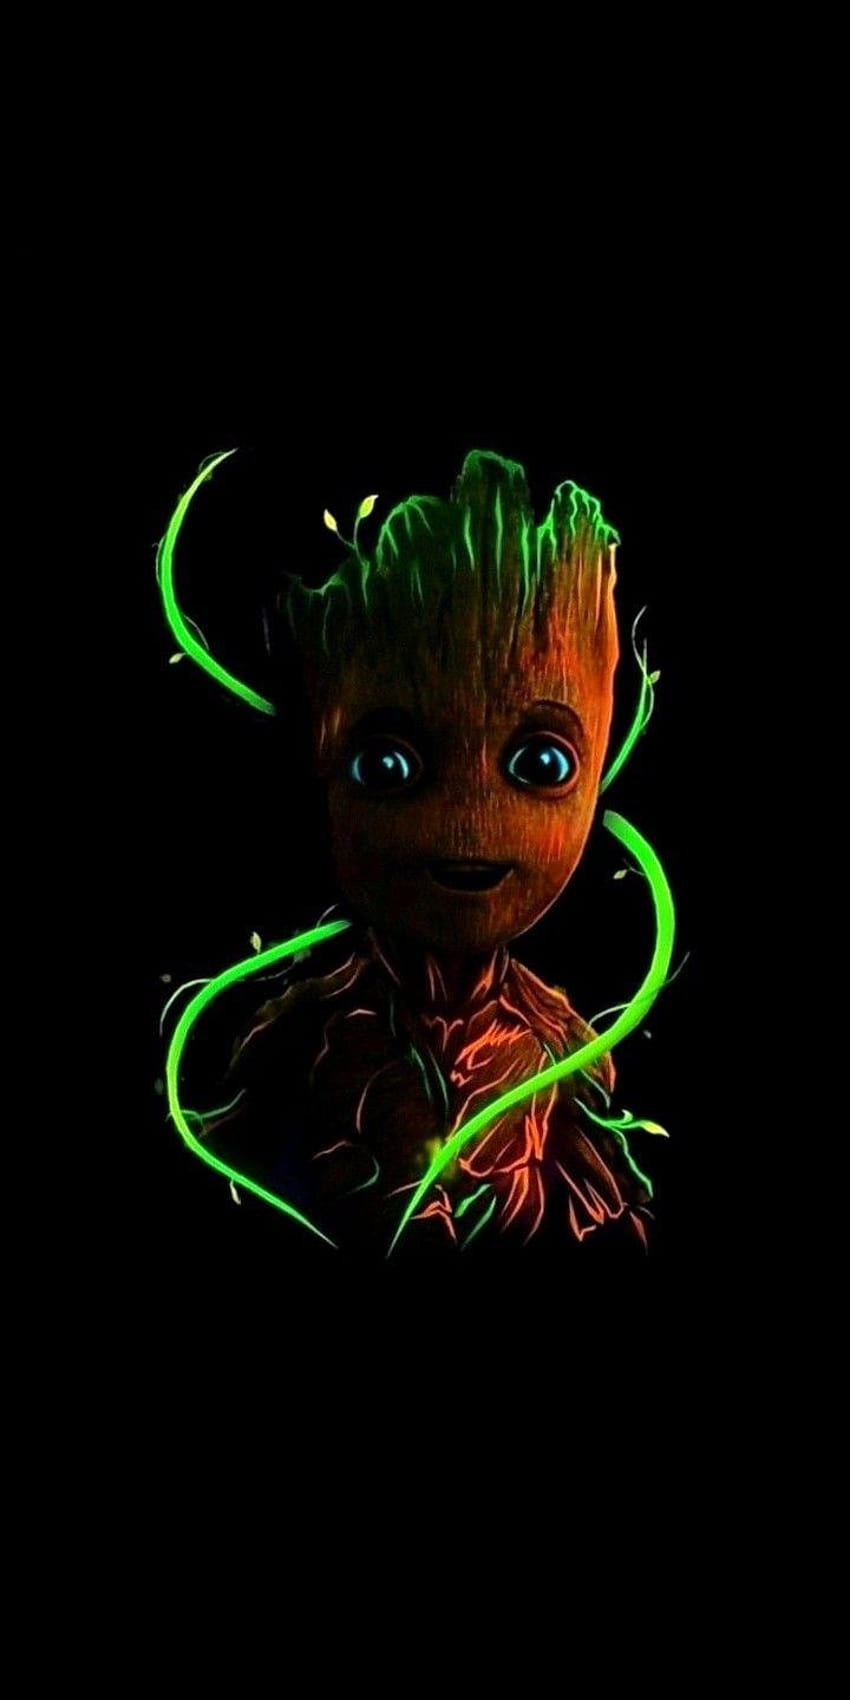 Sono Groot nel 2019, baby Groot minimal art Sfondo del telefono HD